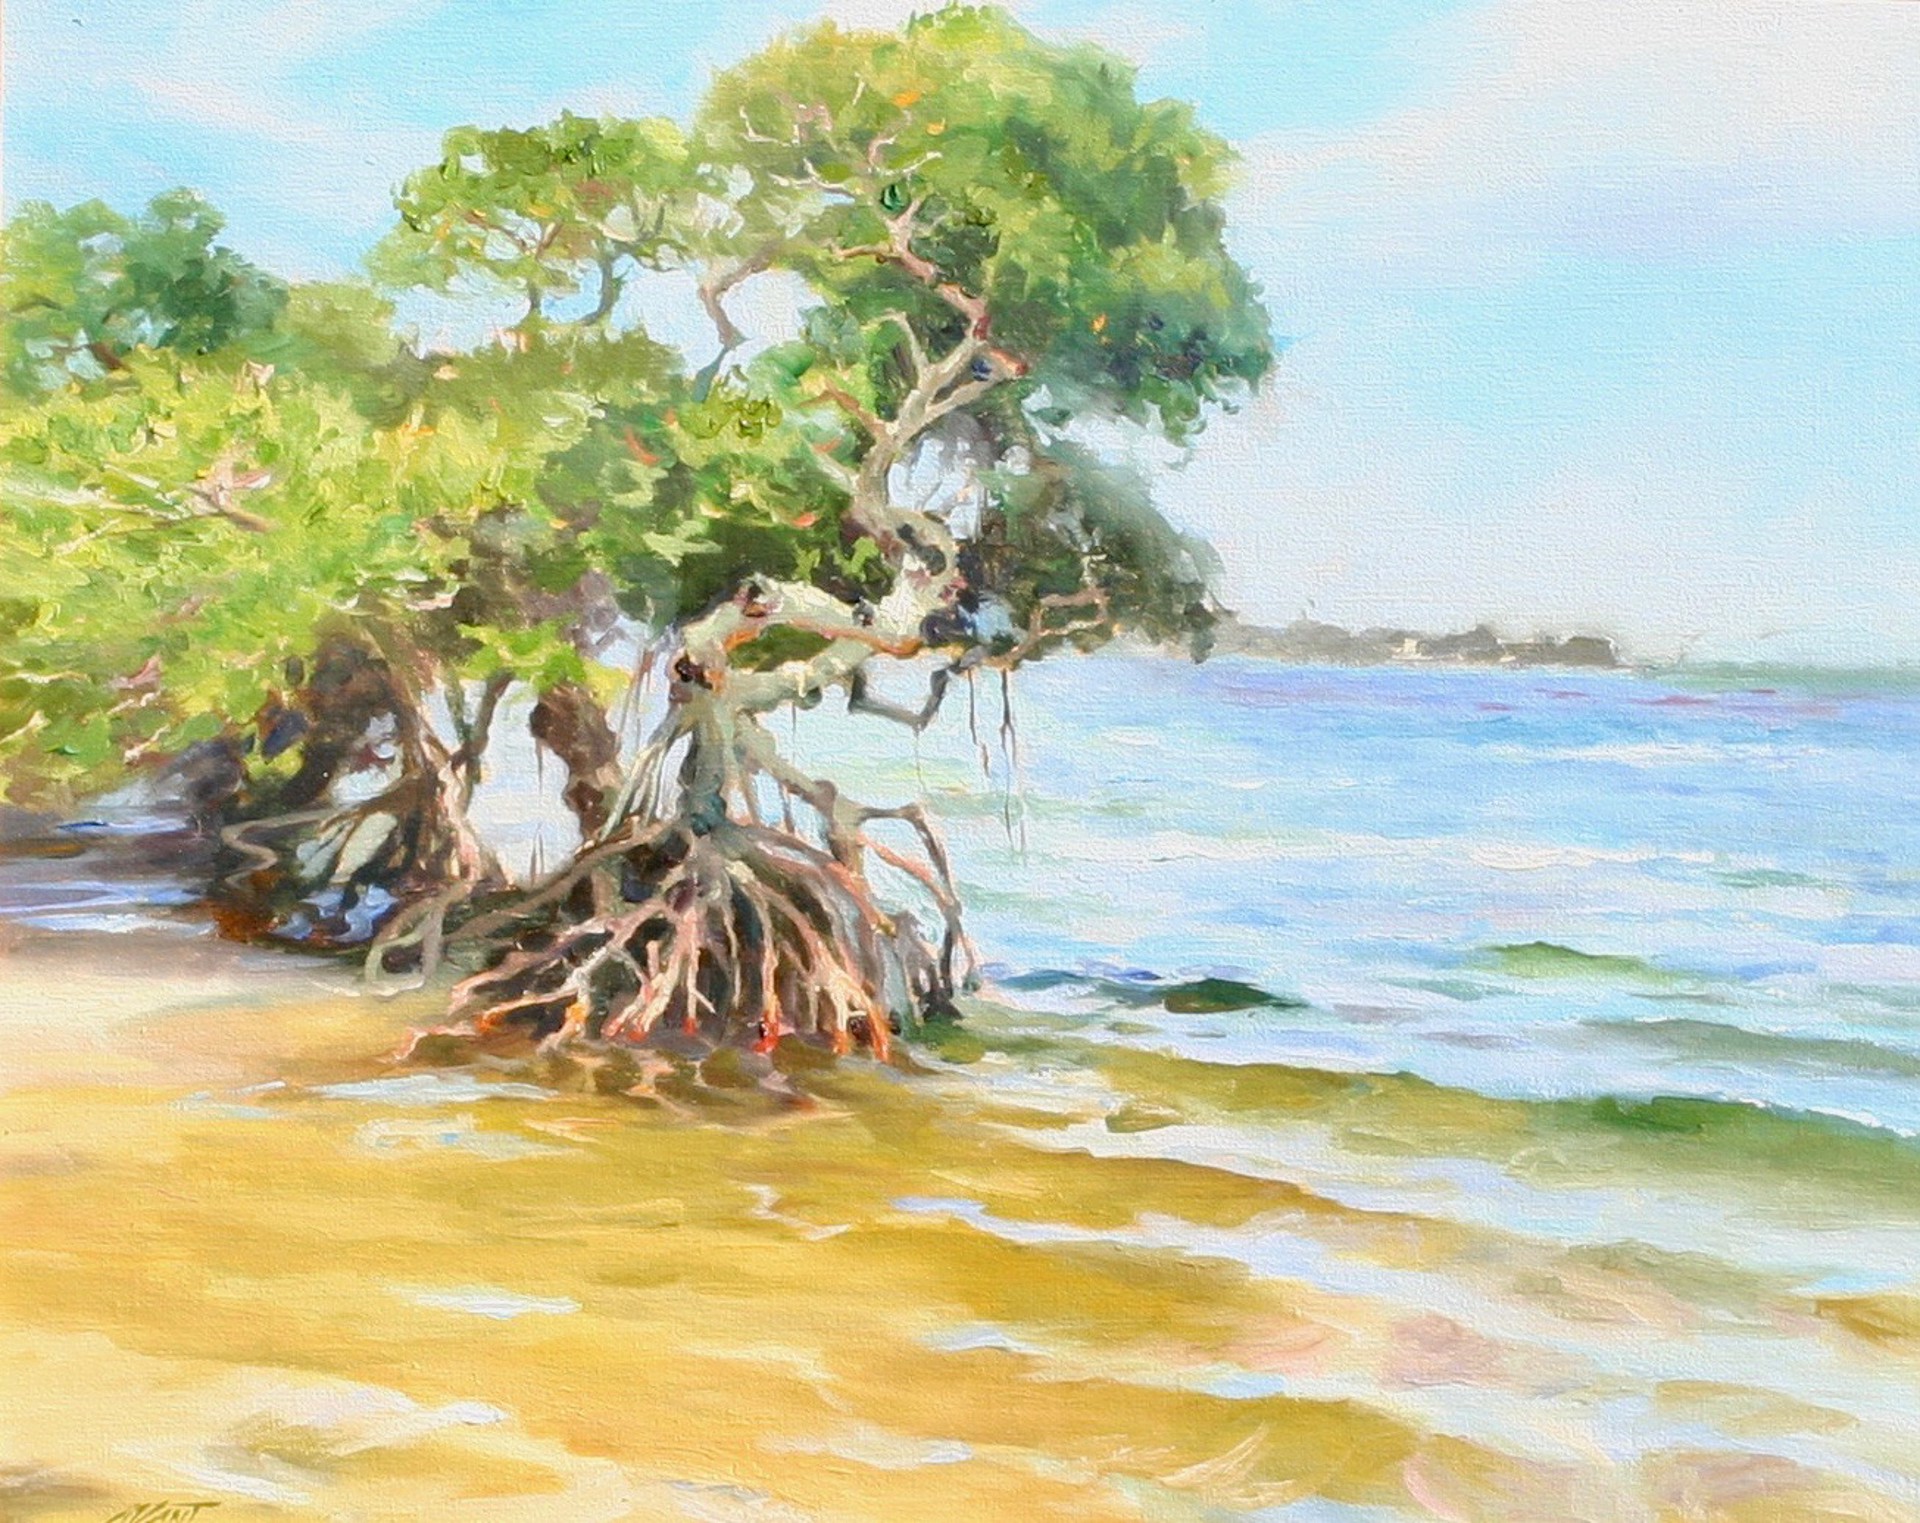 Mangroves by Dominic Avant